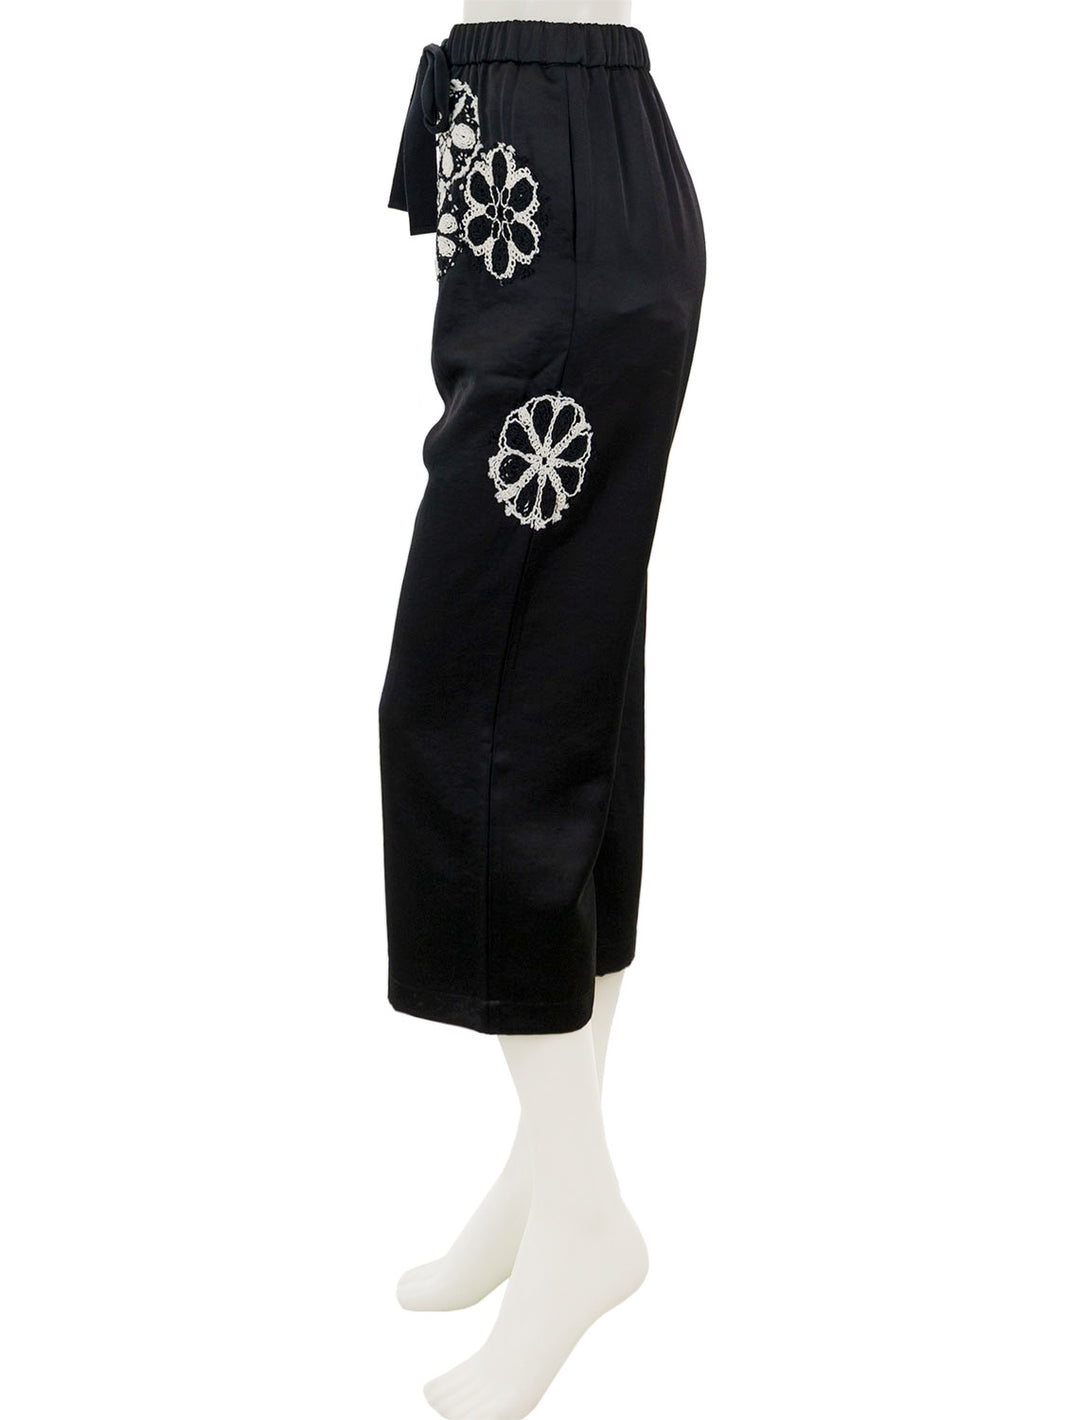 Side view of Saint Art's nova crochet pants in black and ivory.